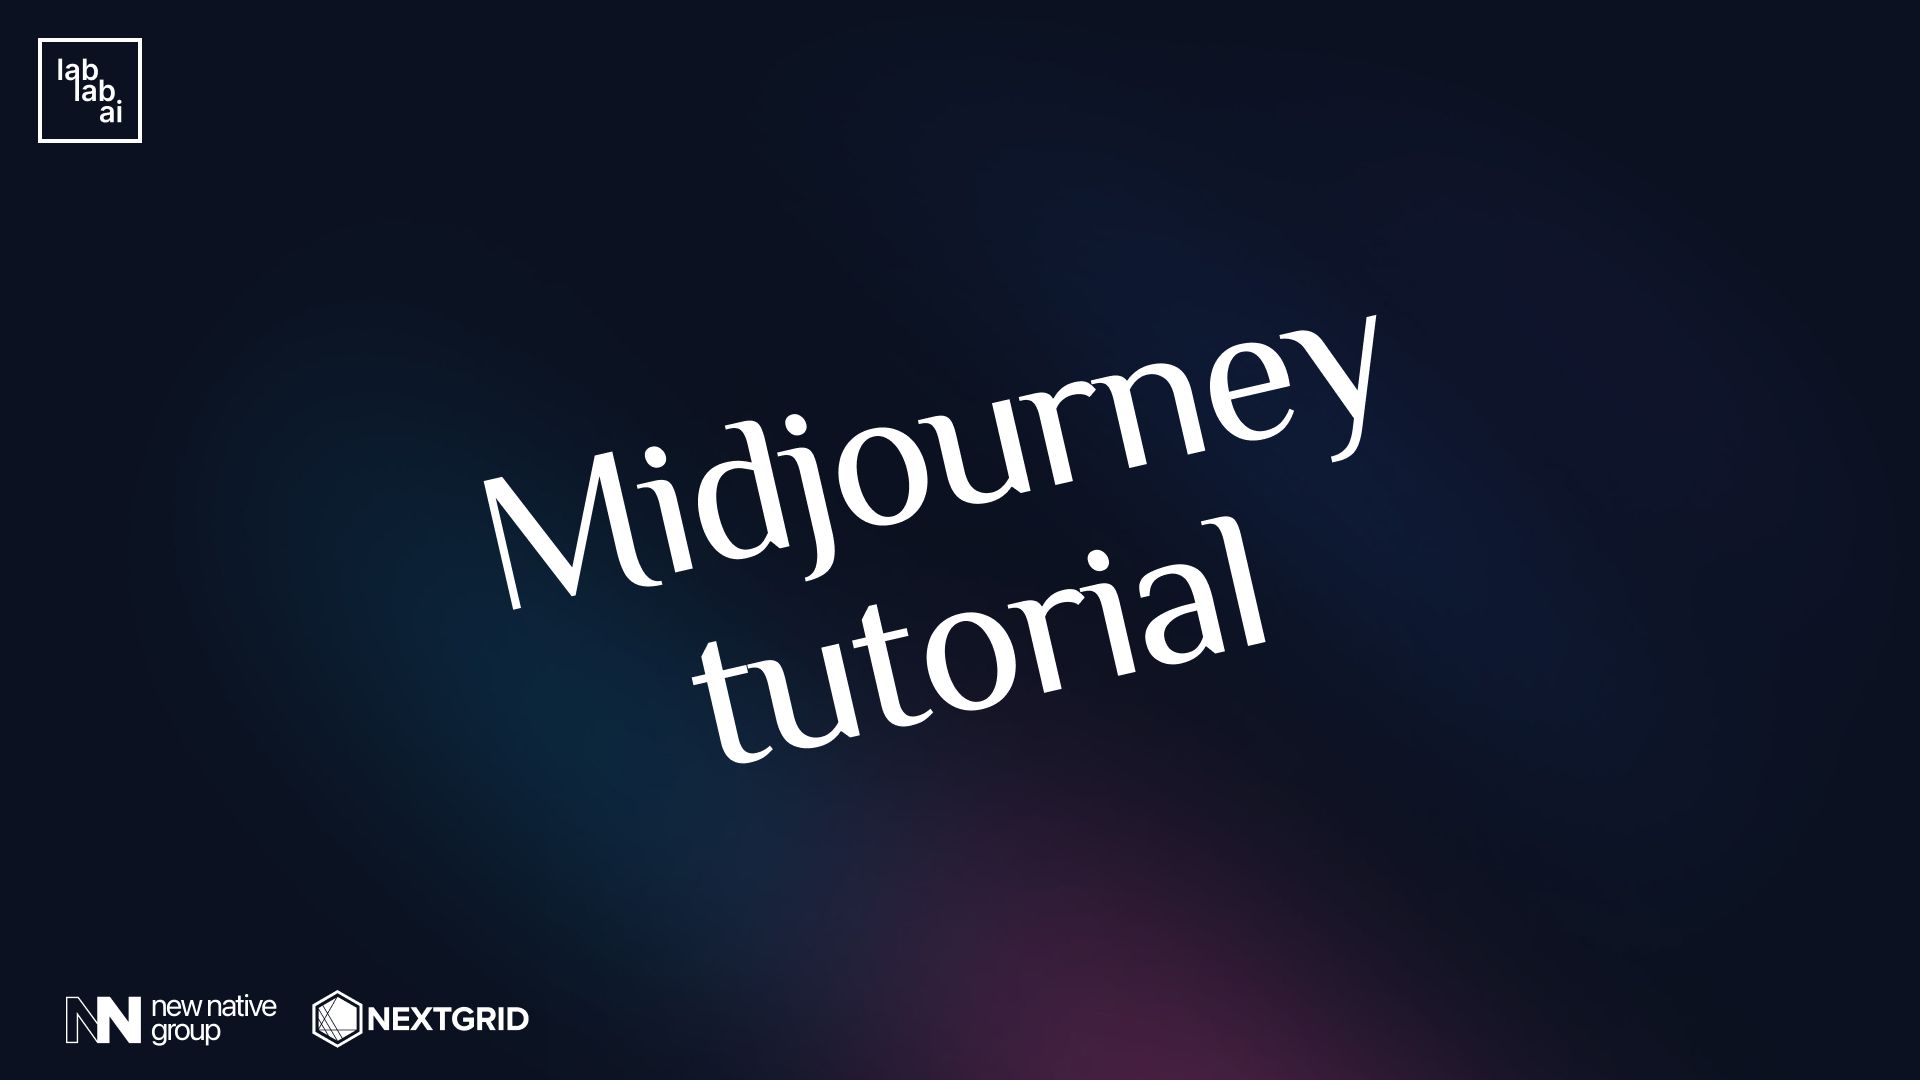 Tutorial de arte de IA de Midjourney: Midjourney, un bot interactivo para generar imágenes a partir de texto.